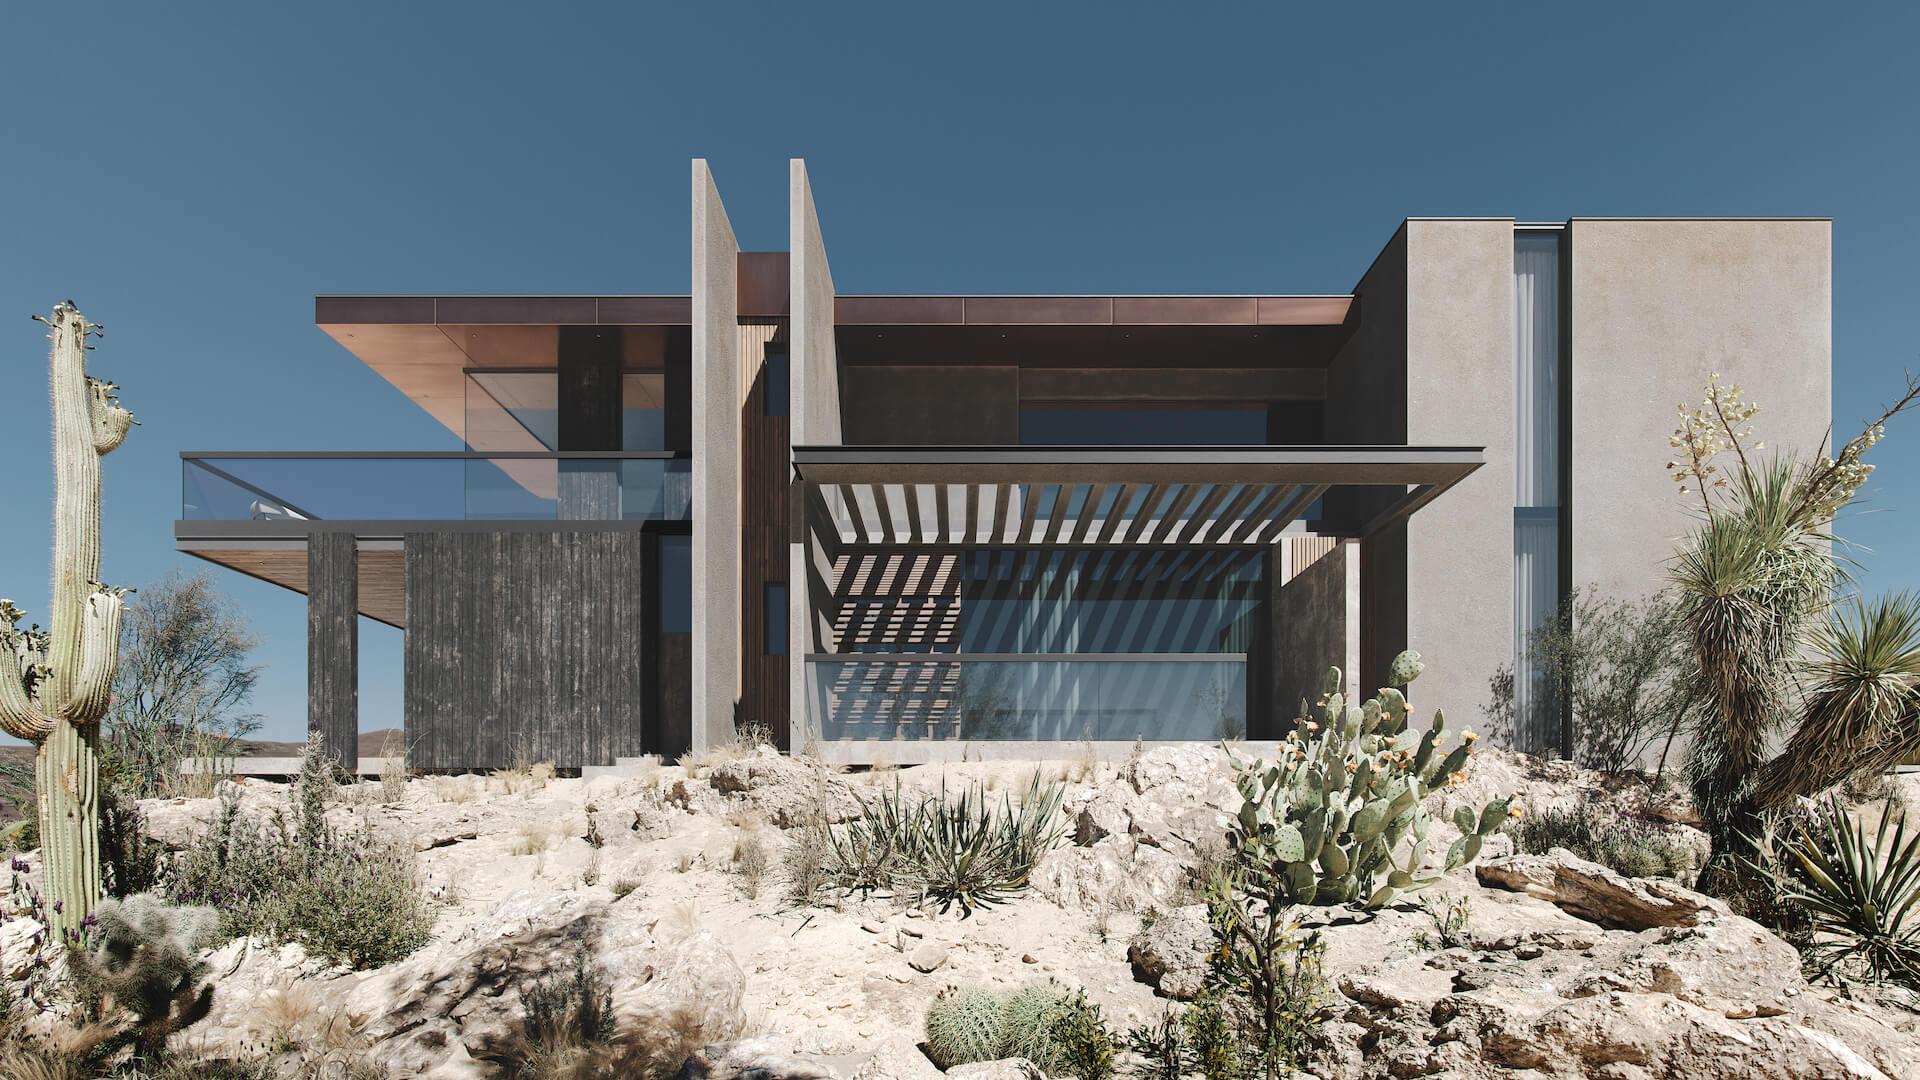 Digital Visualization of a Sleek House in the Desert